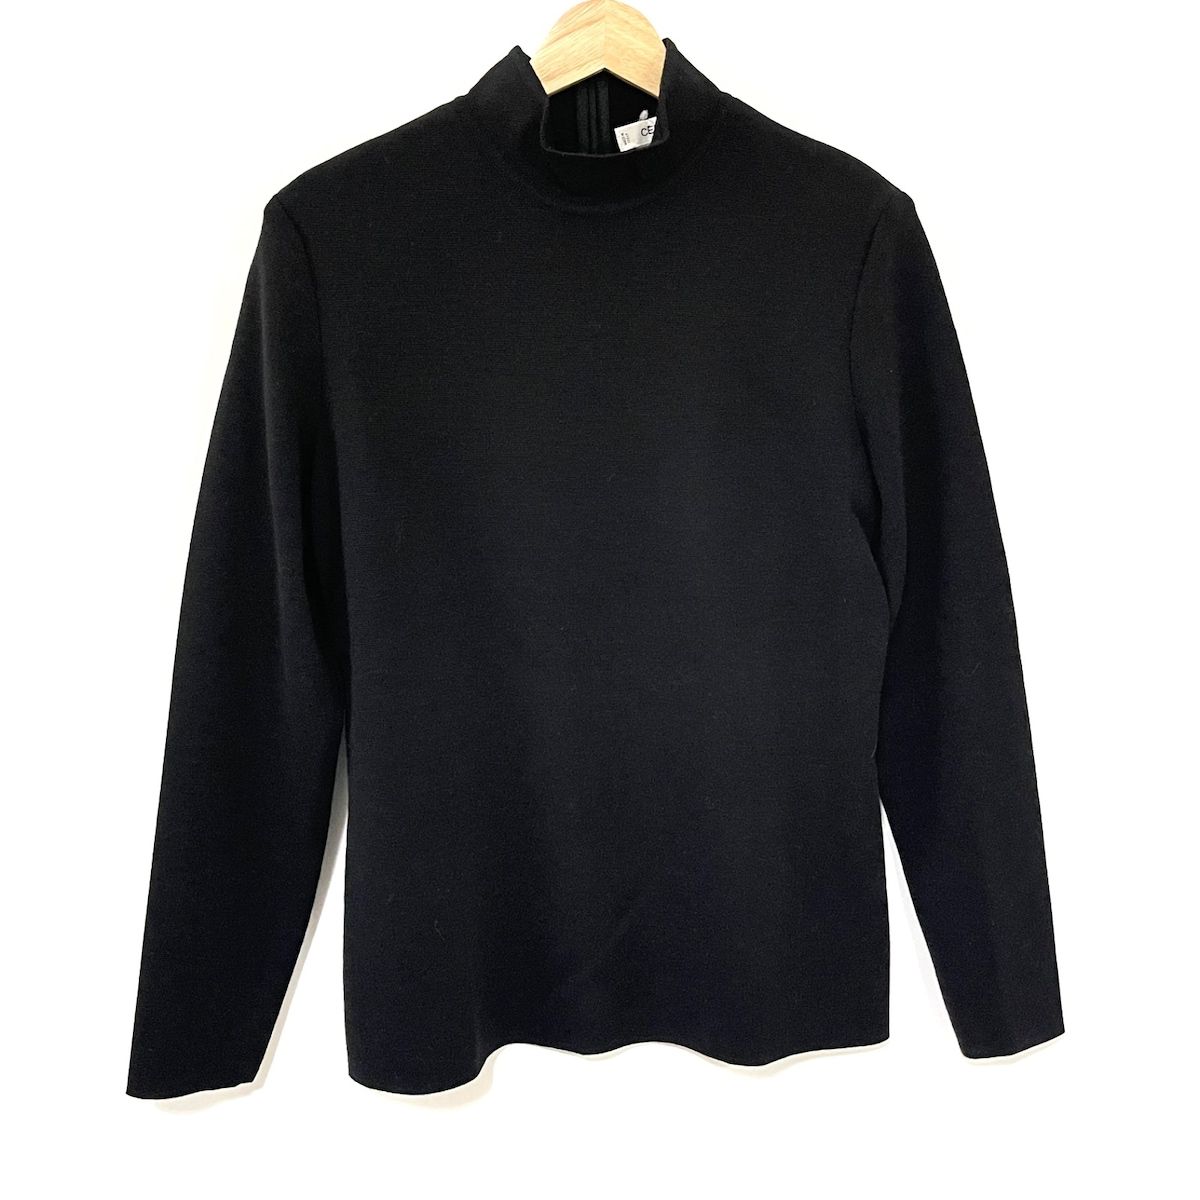 CELINE(セリーヌ) 長袖セーター サイズ42 L レディース美品 - 黒 ...